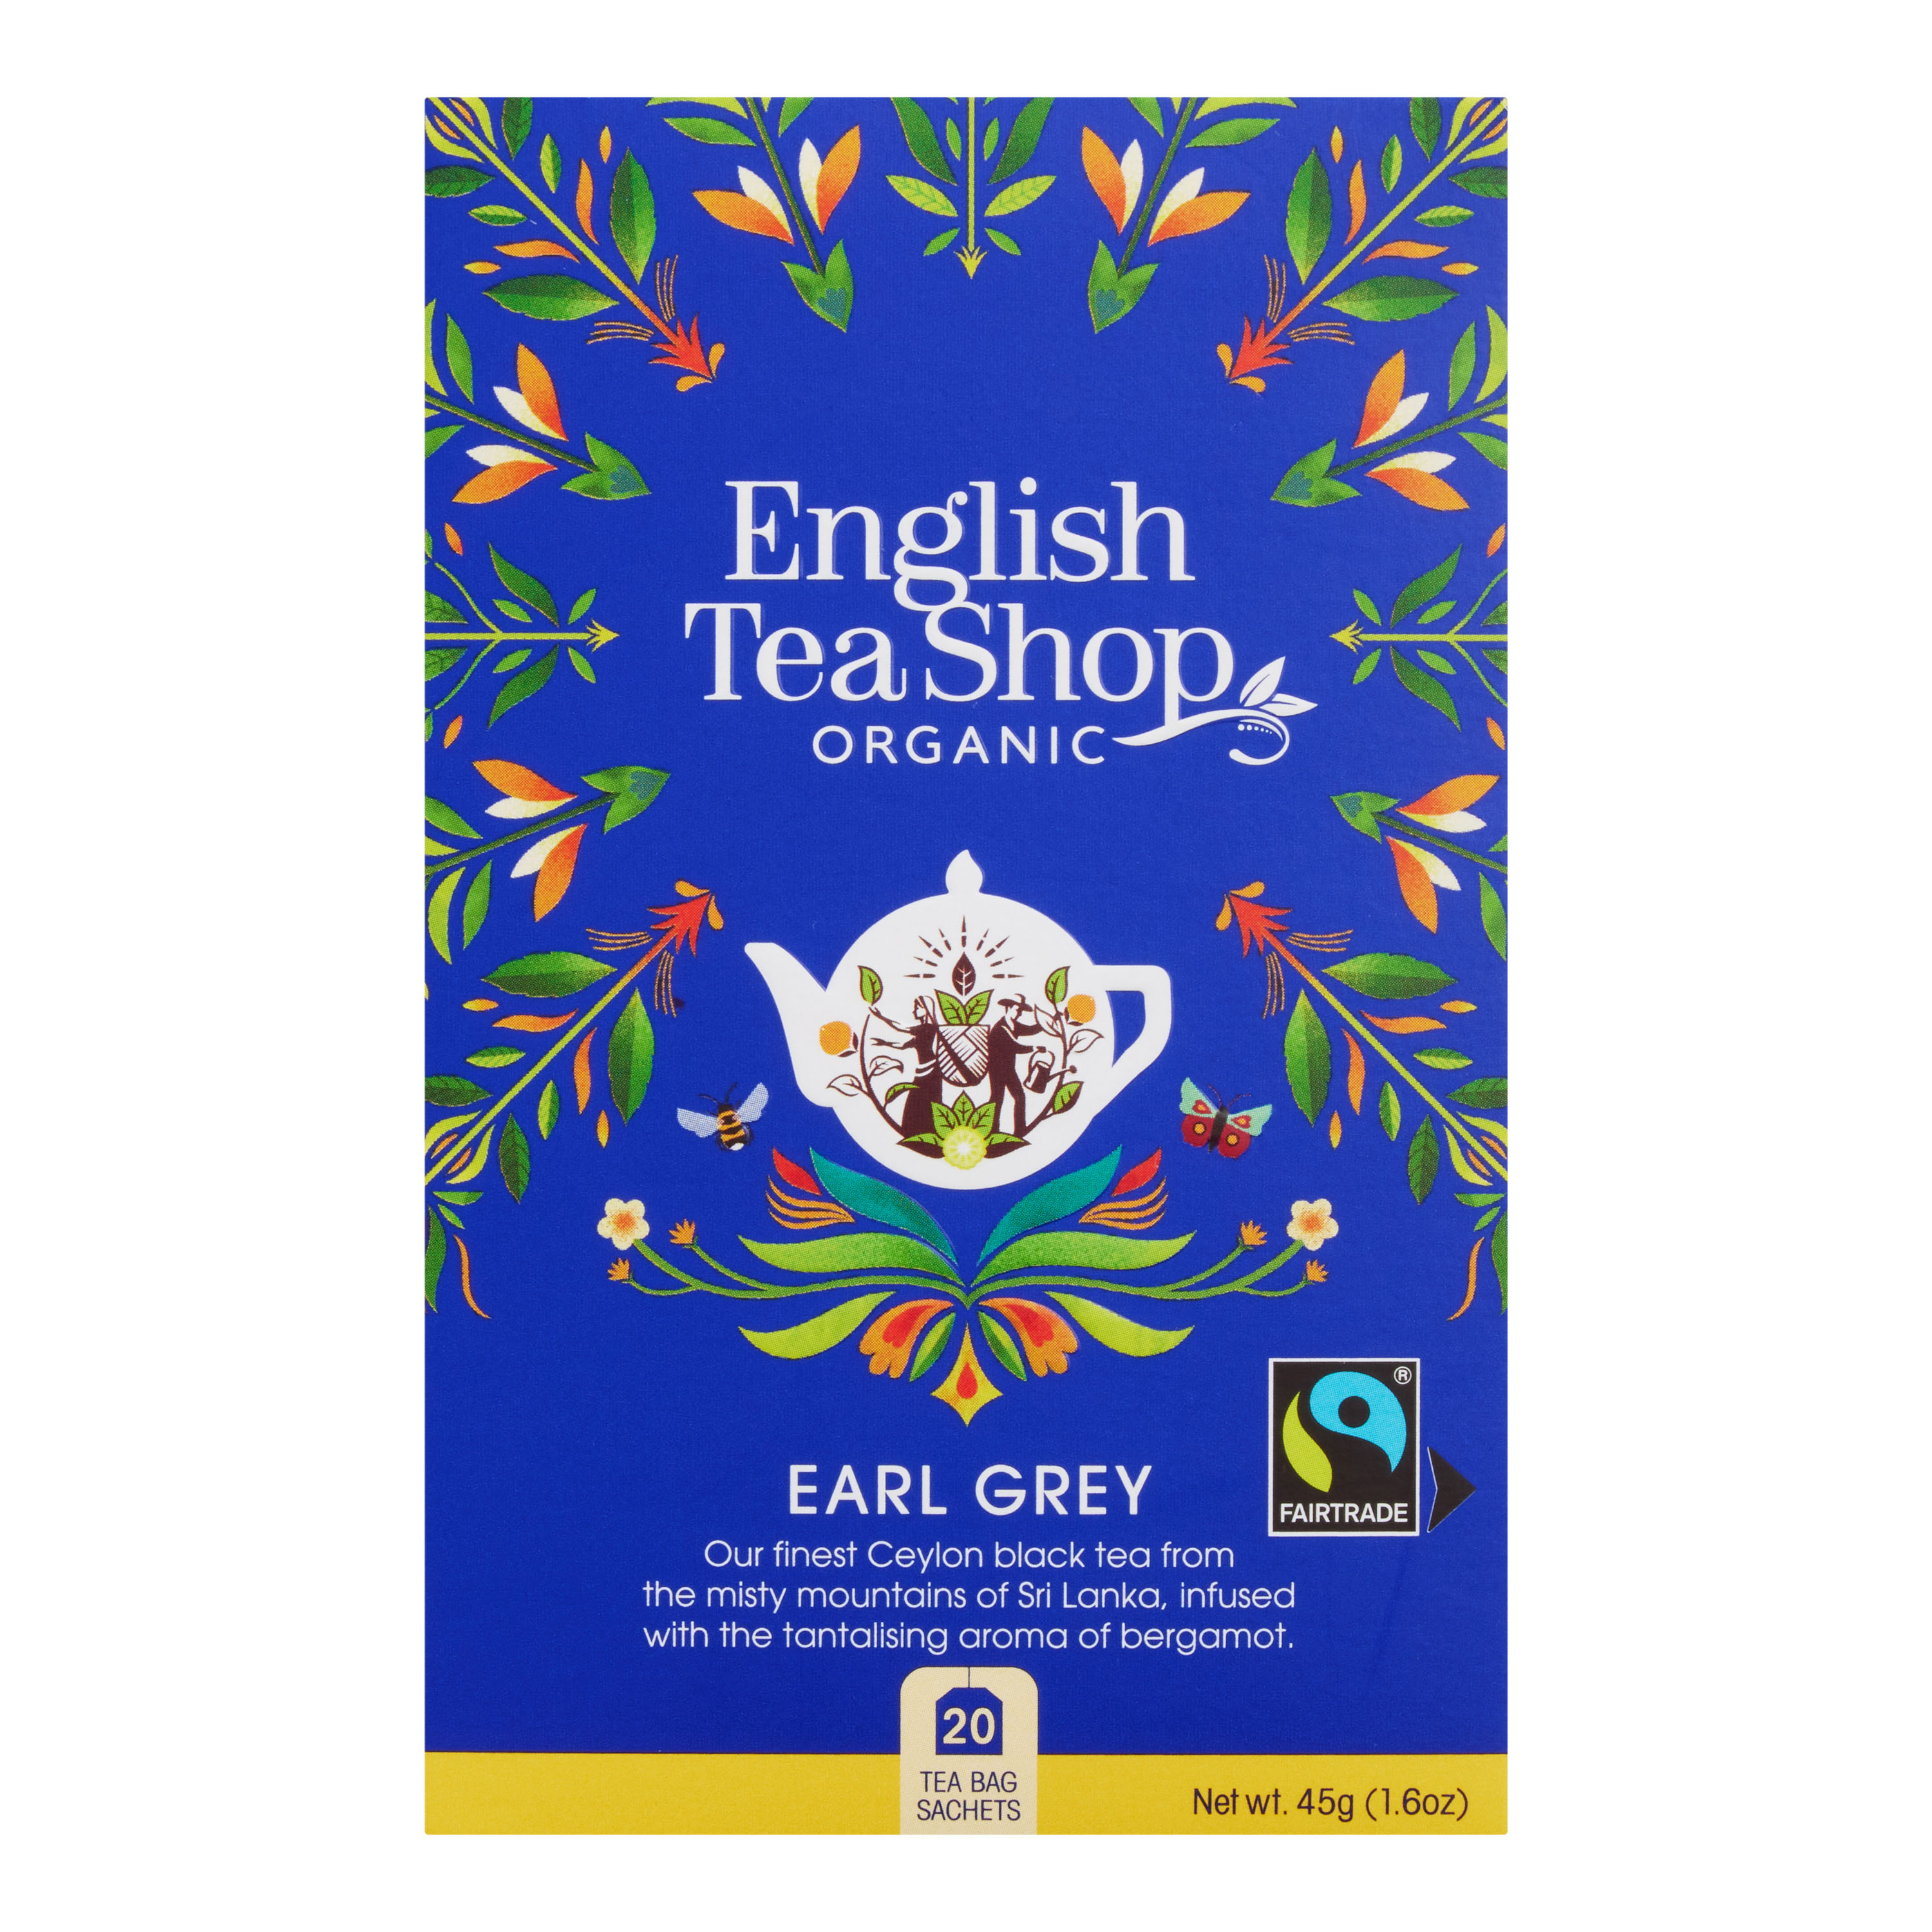 English Tea Shop Organic Earl Grey Tea 20 Count - World Market